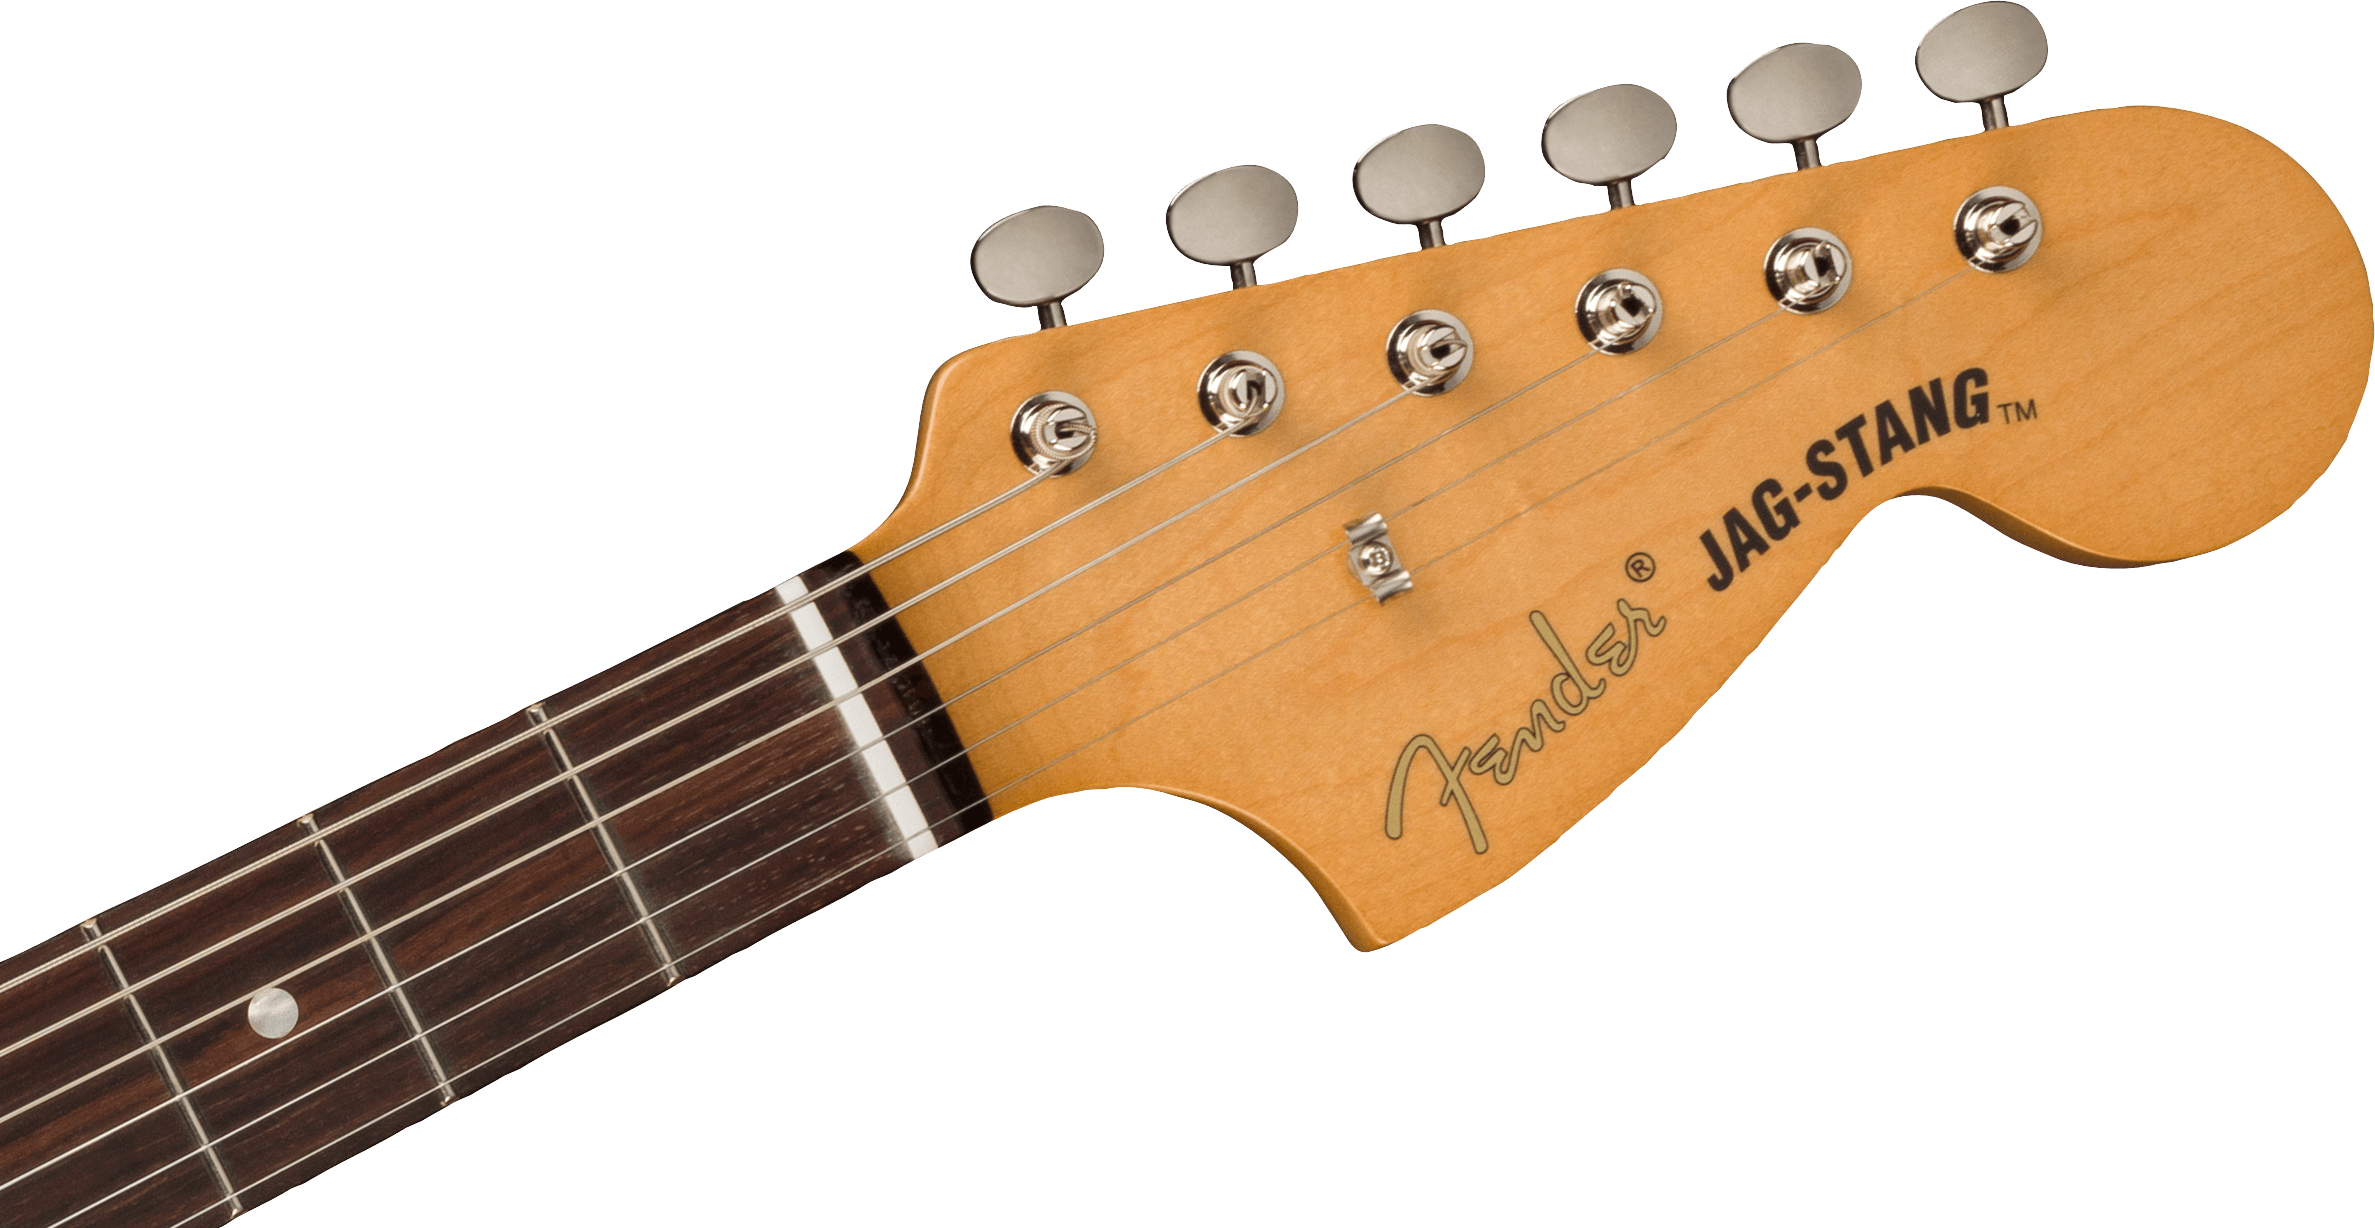 Fender Jag-stang Kurt Cobain Artist Hs Trem Rw - Fiesta Red - Retro-rock elektrische gitaar - Variation 4